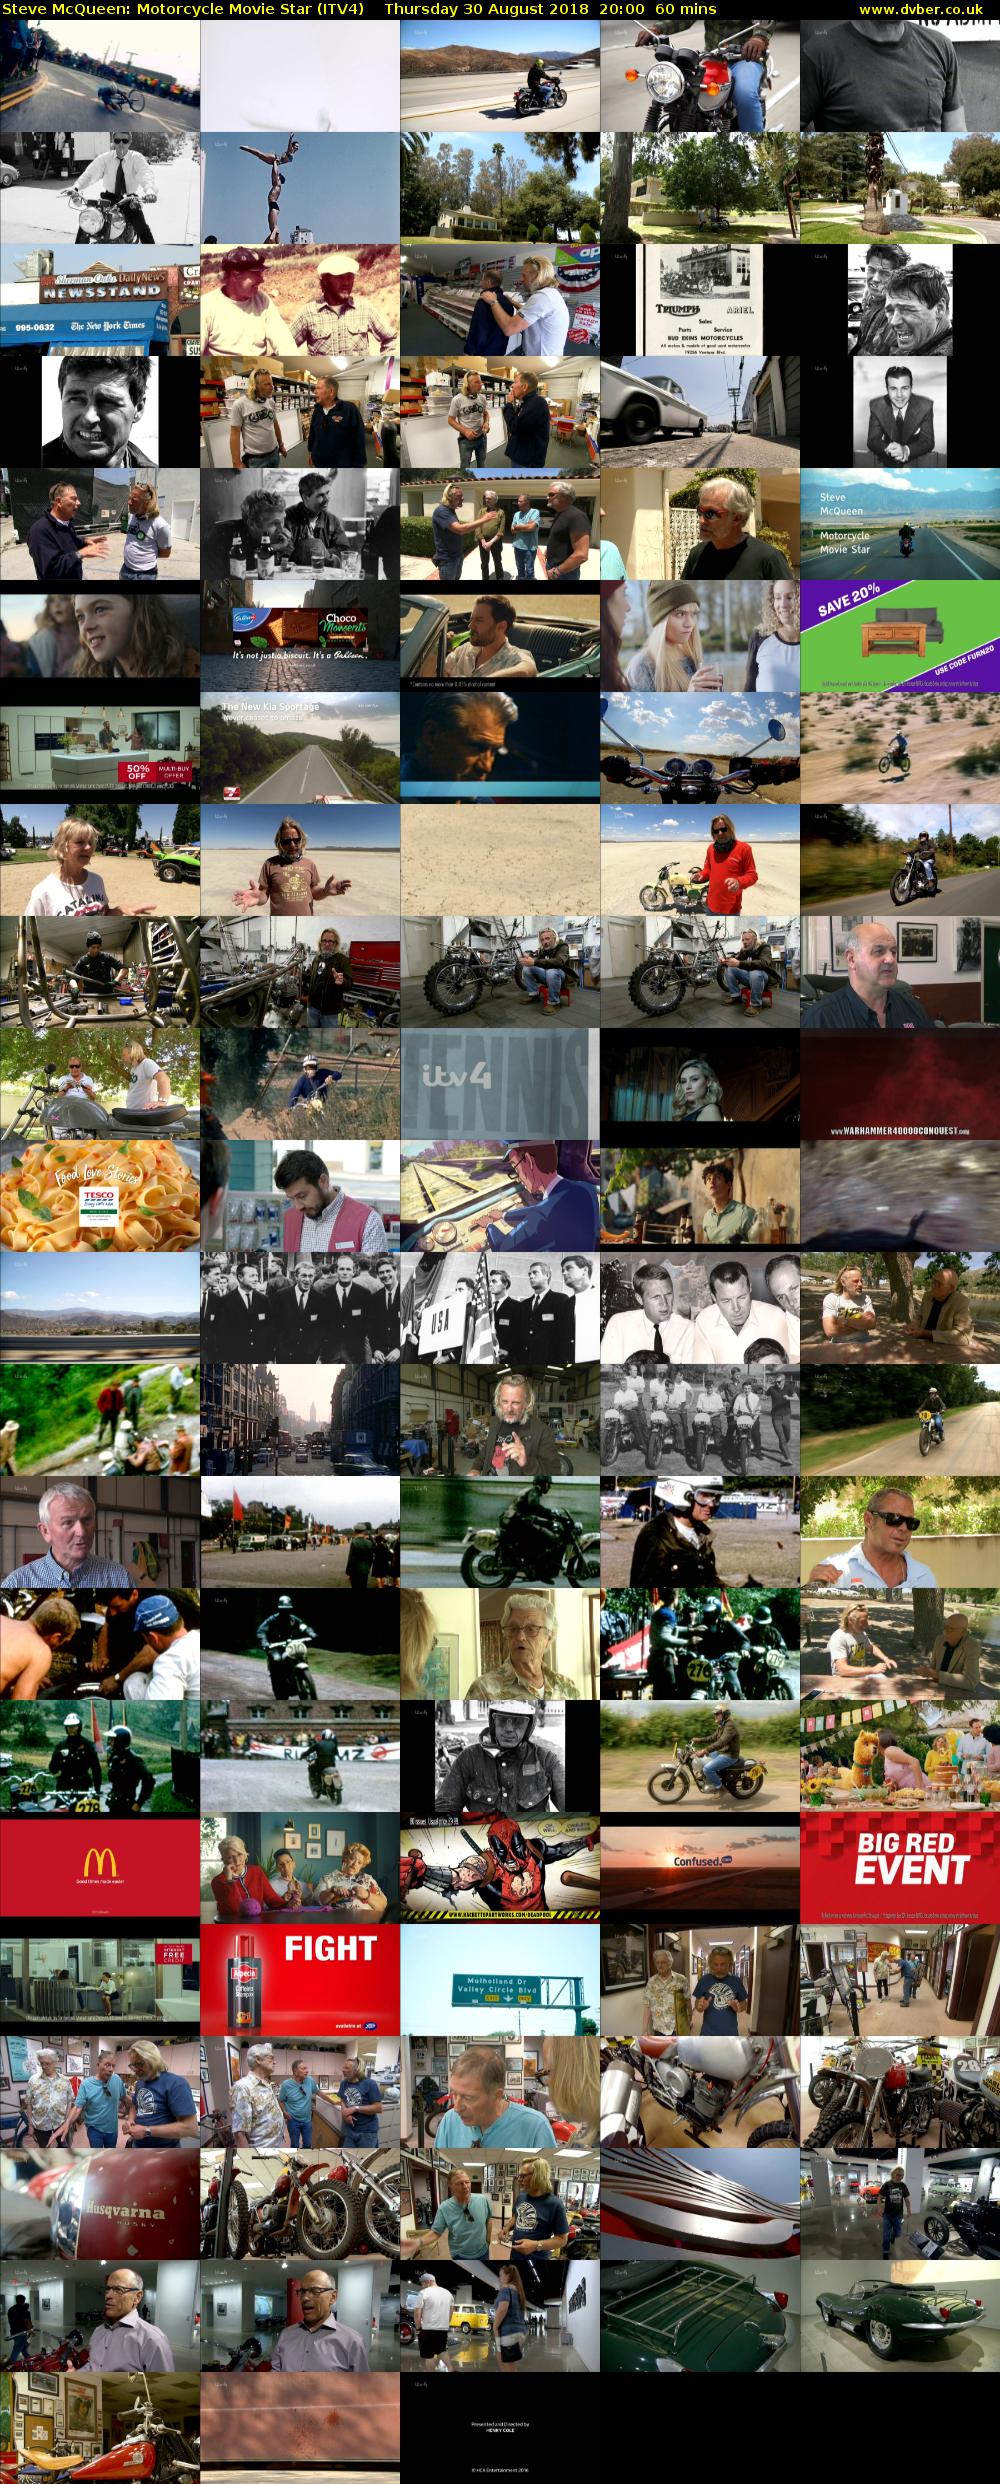 Steve McQueen: Motorcycle Movie Star (ITV4) Thursday 30 August 2018 20:00 - 21:00